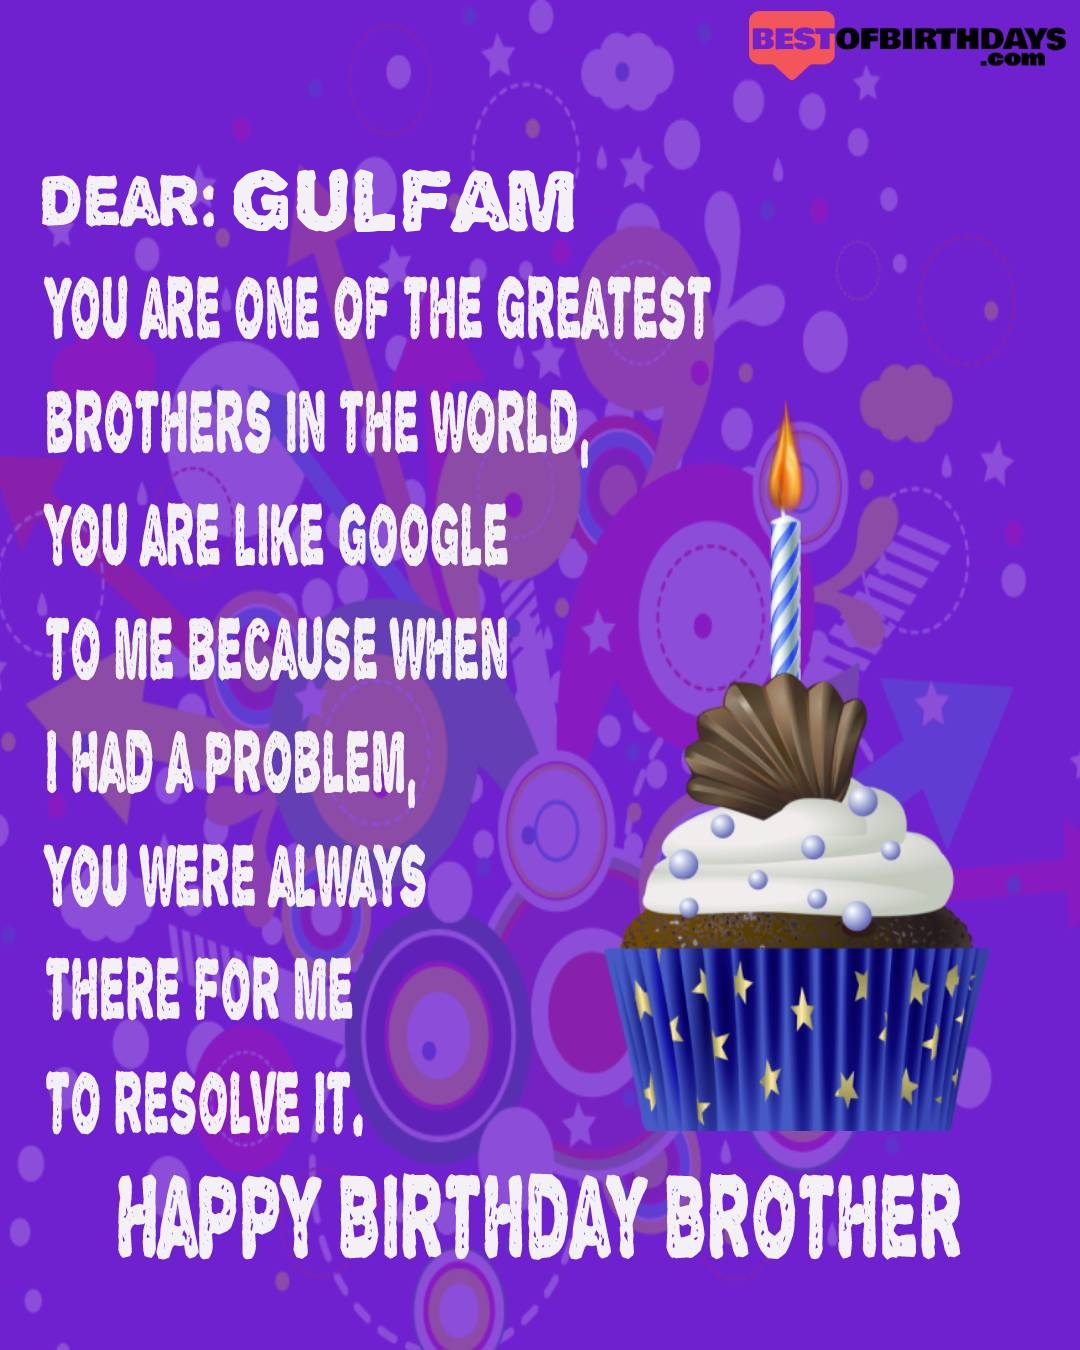 Happy birthday gulfam bhai brother bro